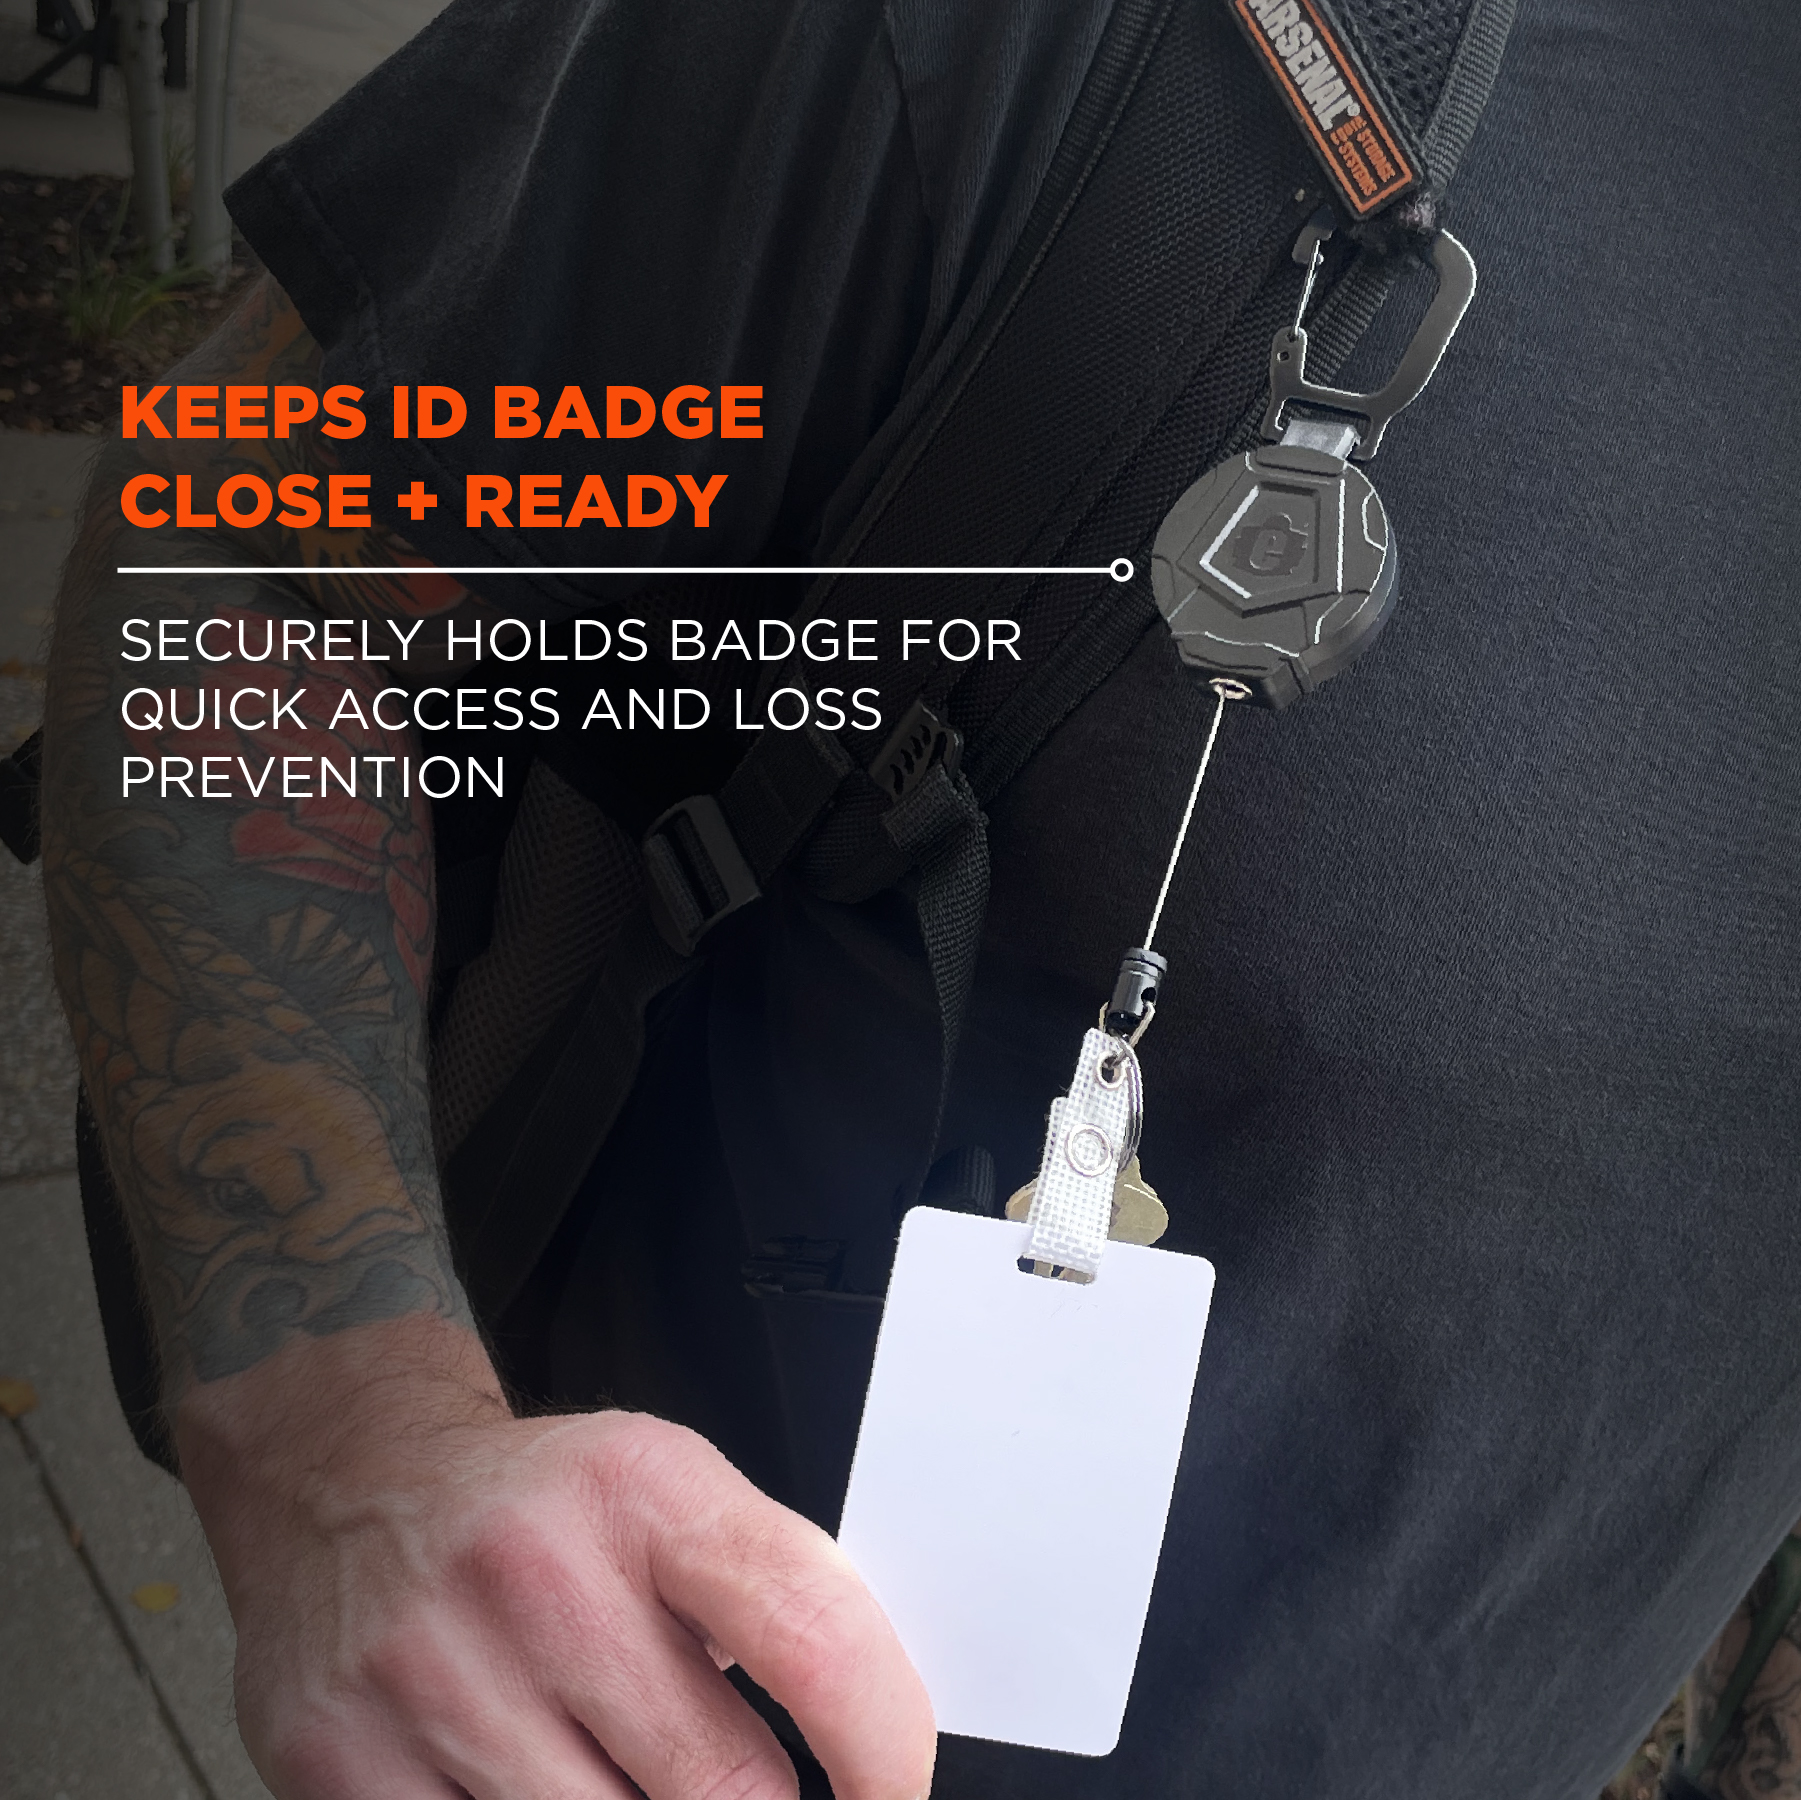 Retractable ID/Badge Holder